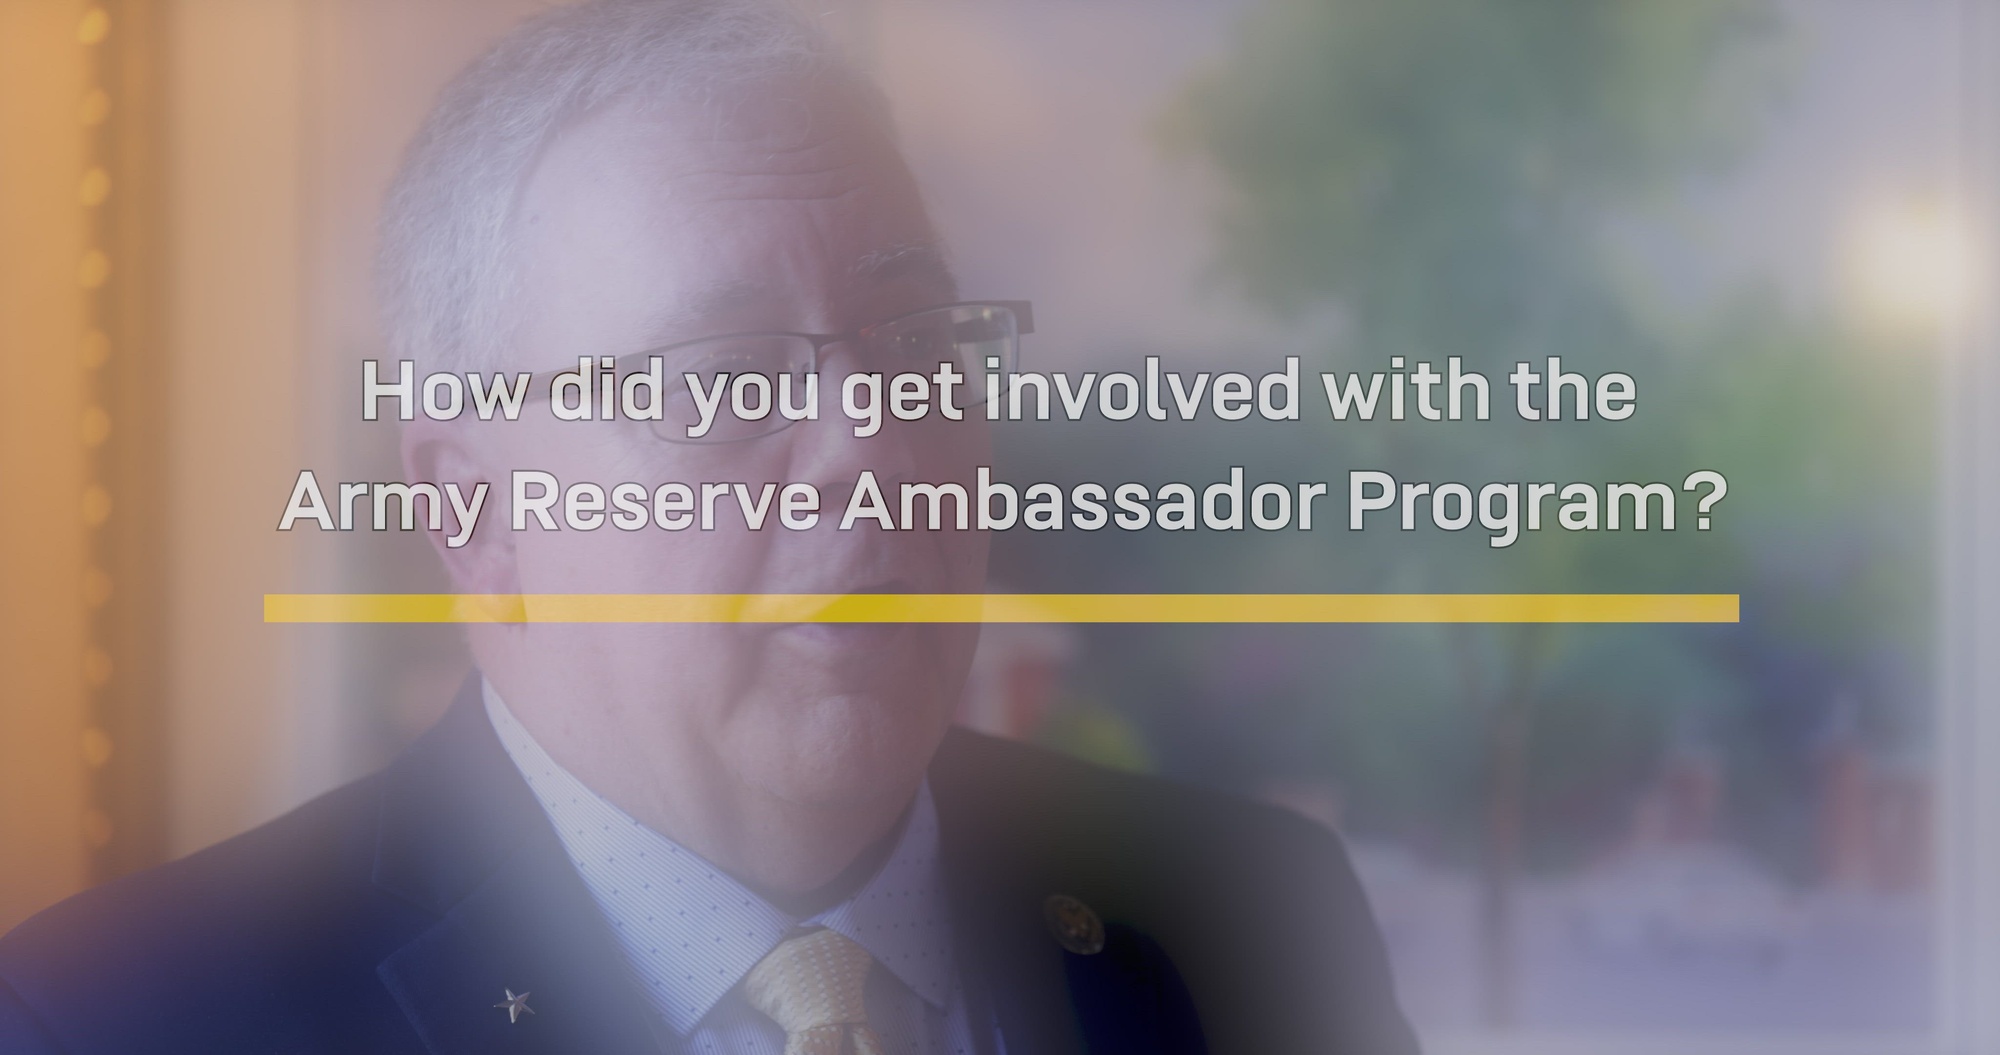 Army Reserve Ambassador Bob Pleczkowski tells us how he got involved with the ARA Program.